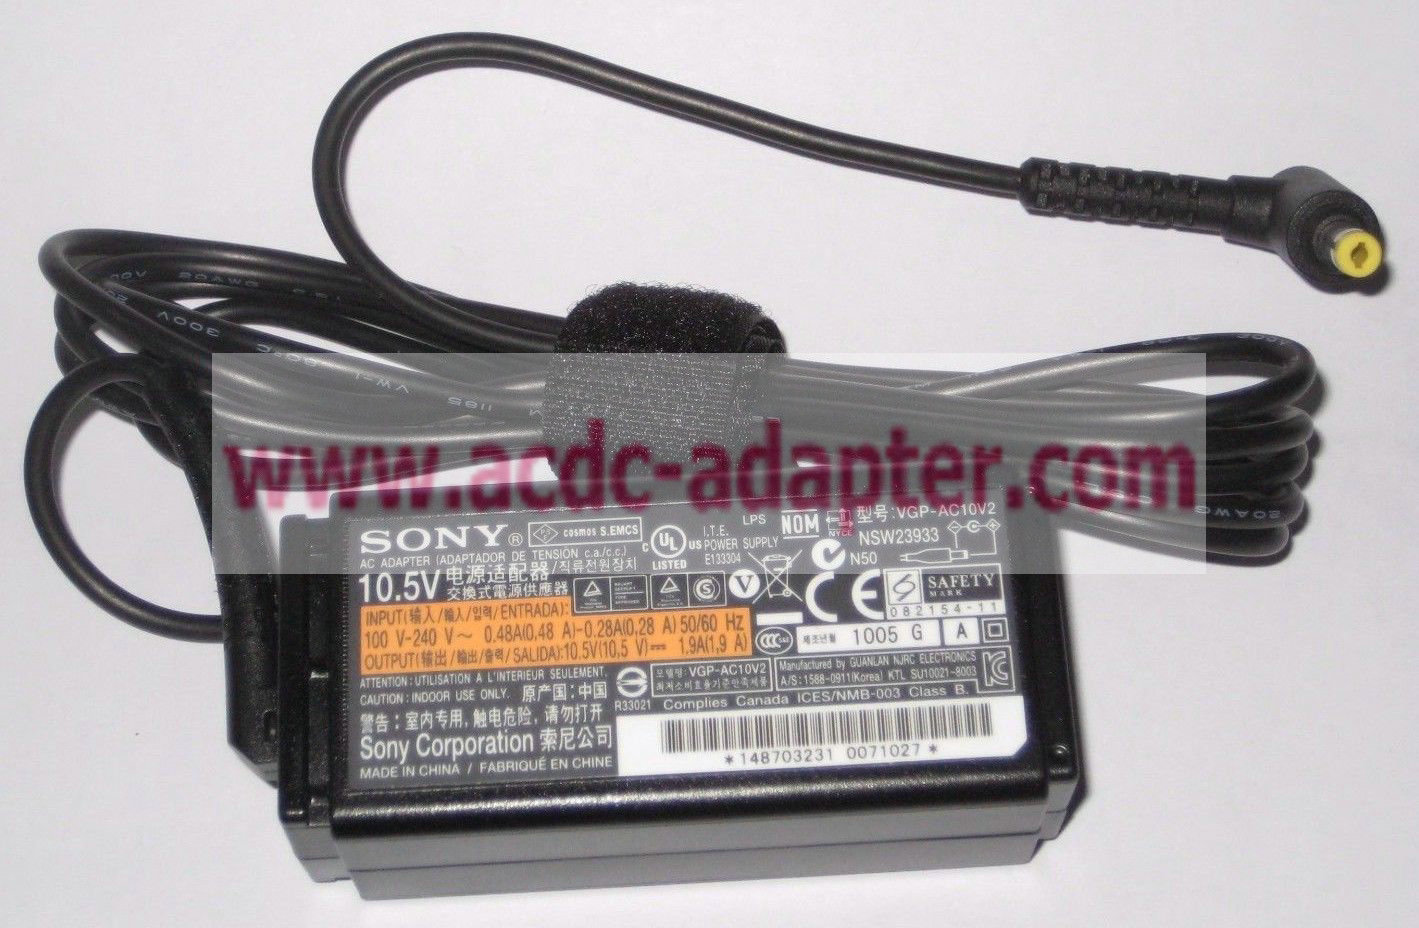 New Sony VGP-AC10V2 10.5v 1.9A Laptop Power DC Adapter - Click Image to Close